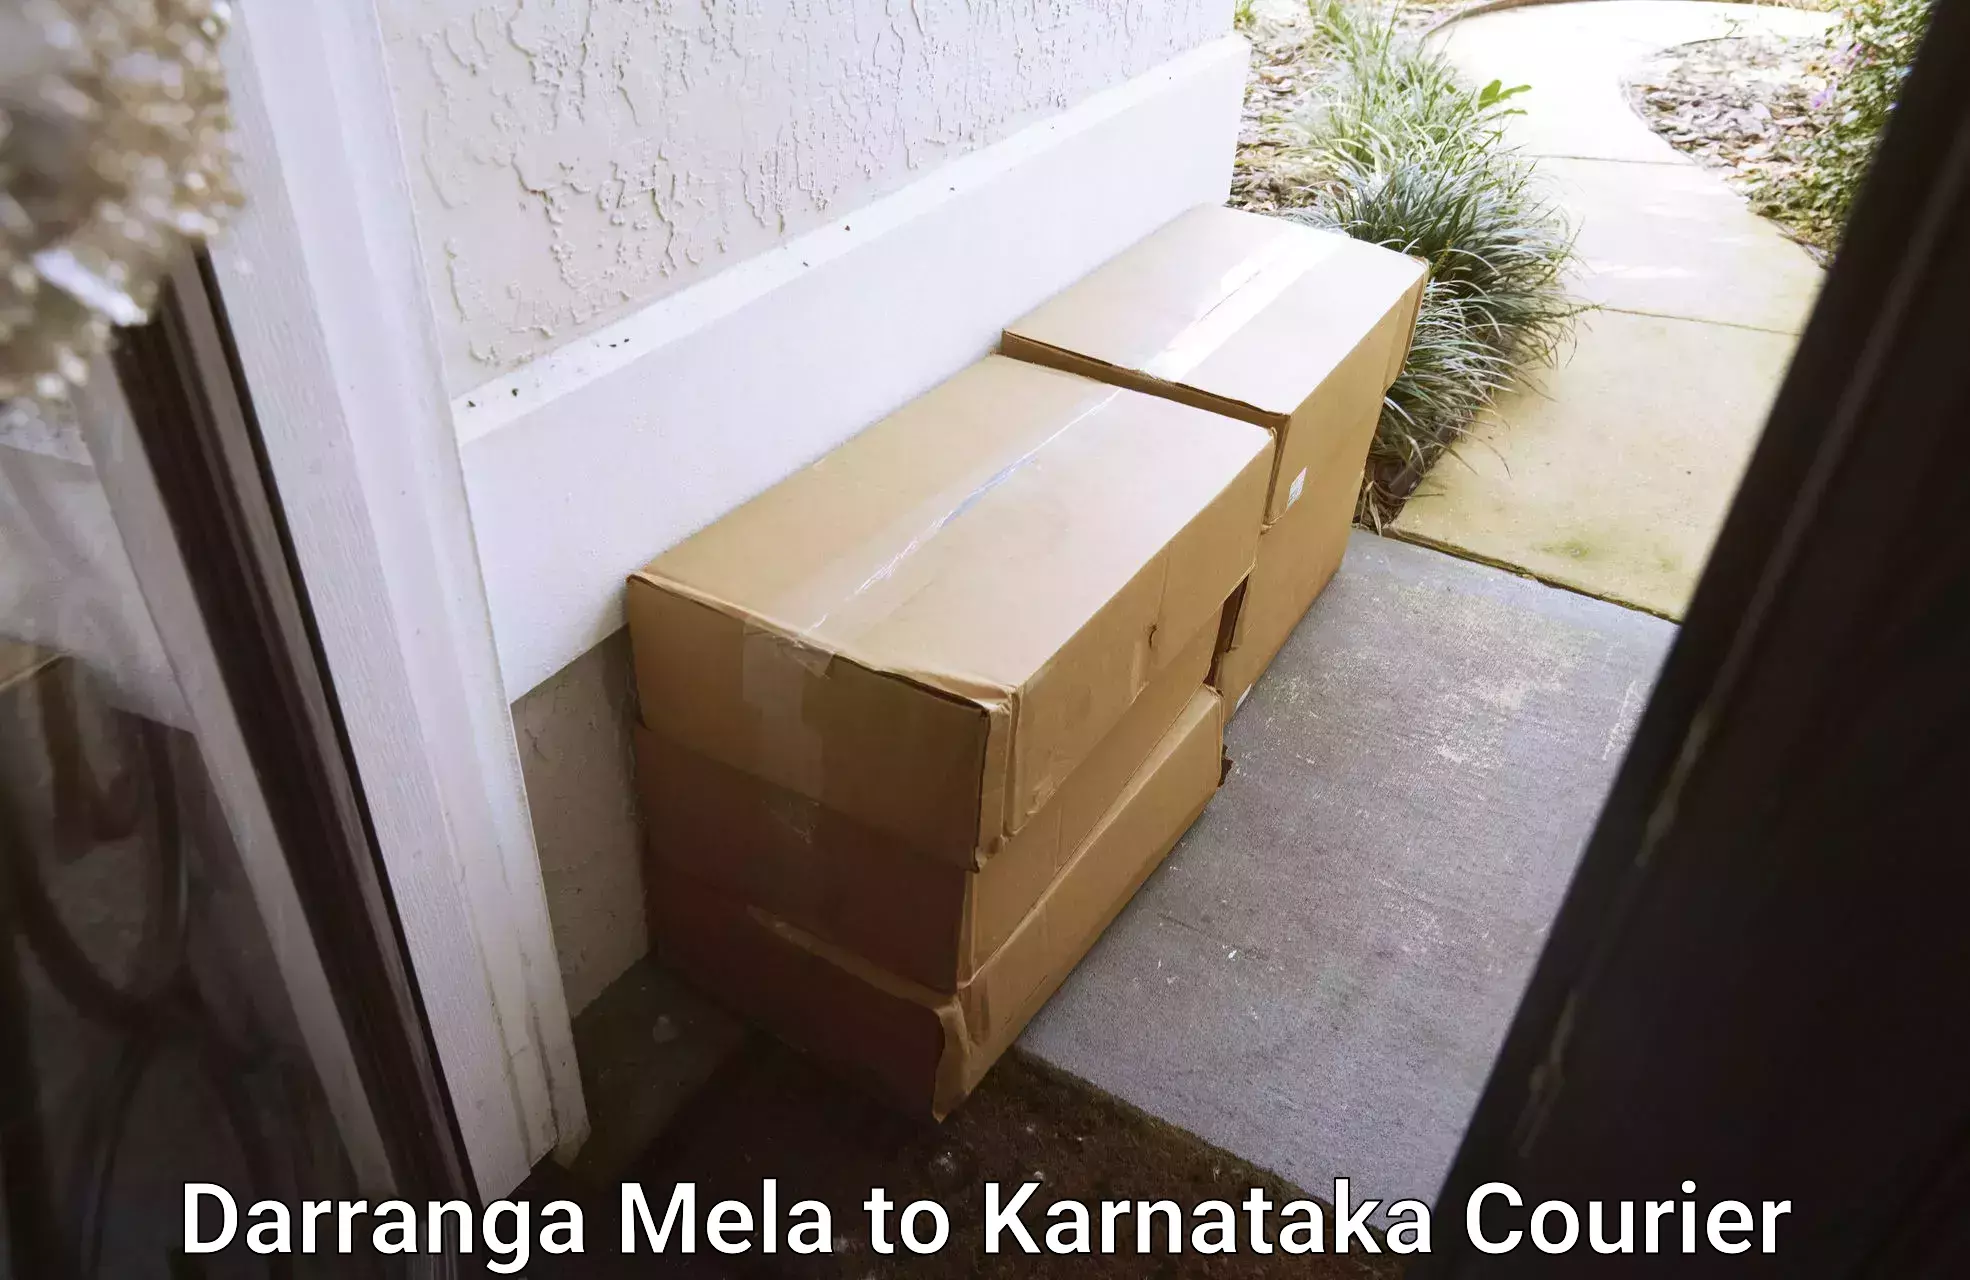 Expedited shipping methods Darranga Mela to Bengaluru